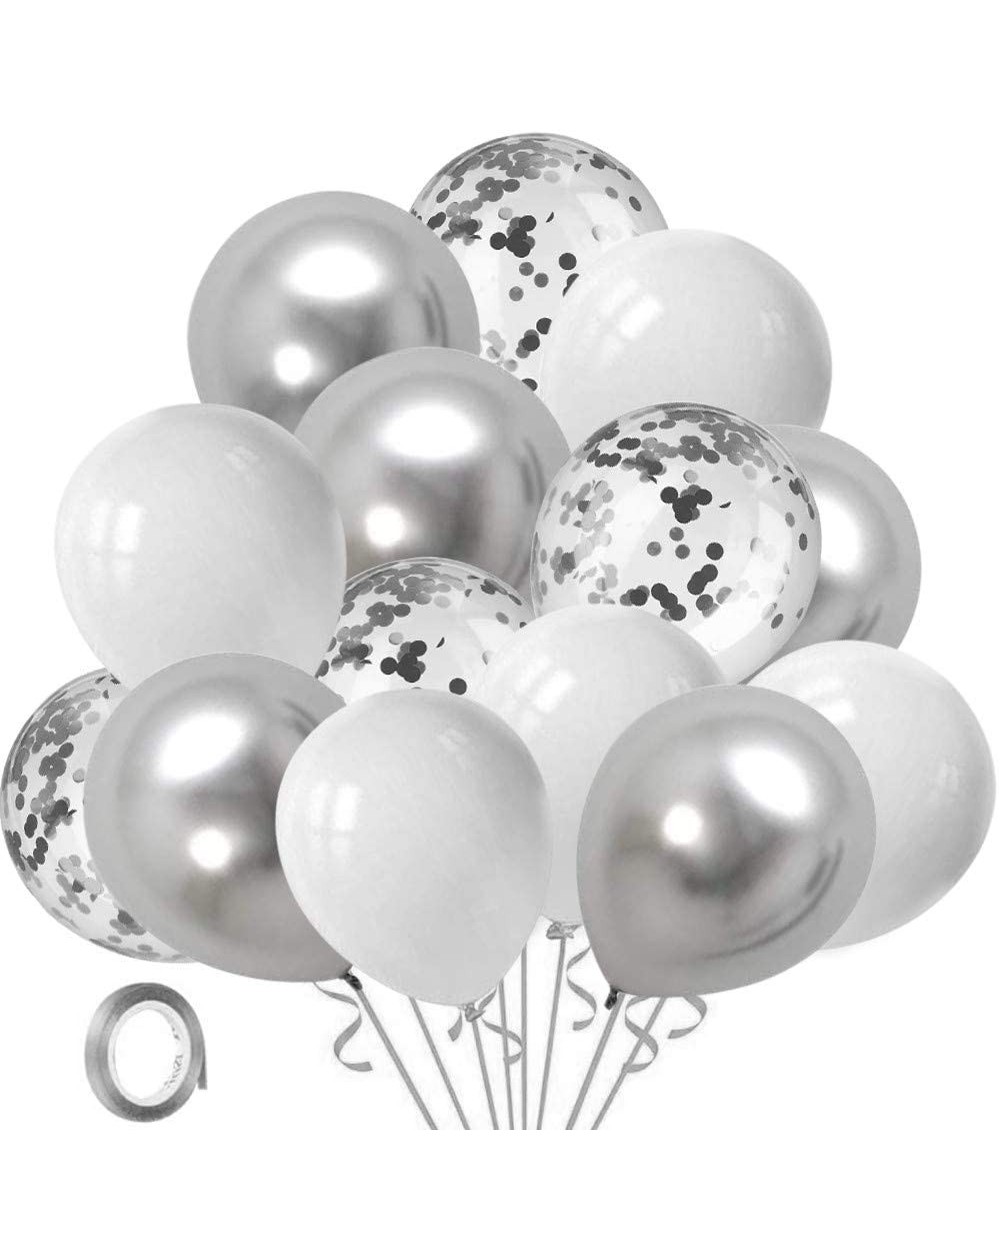 Balloons White Silver Confetti Party Balloons - 60 Pcs 12inch White Pearl Silver Metallic Chrome Latex Balloon Set with 33Ft ...